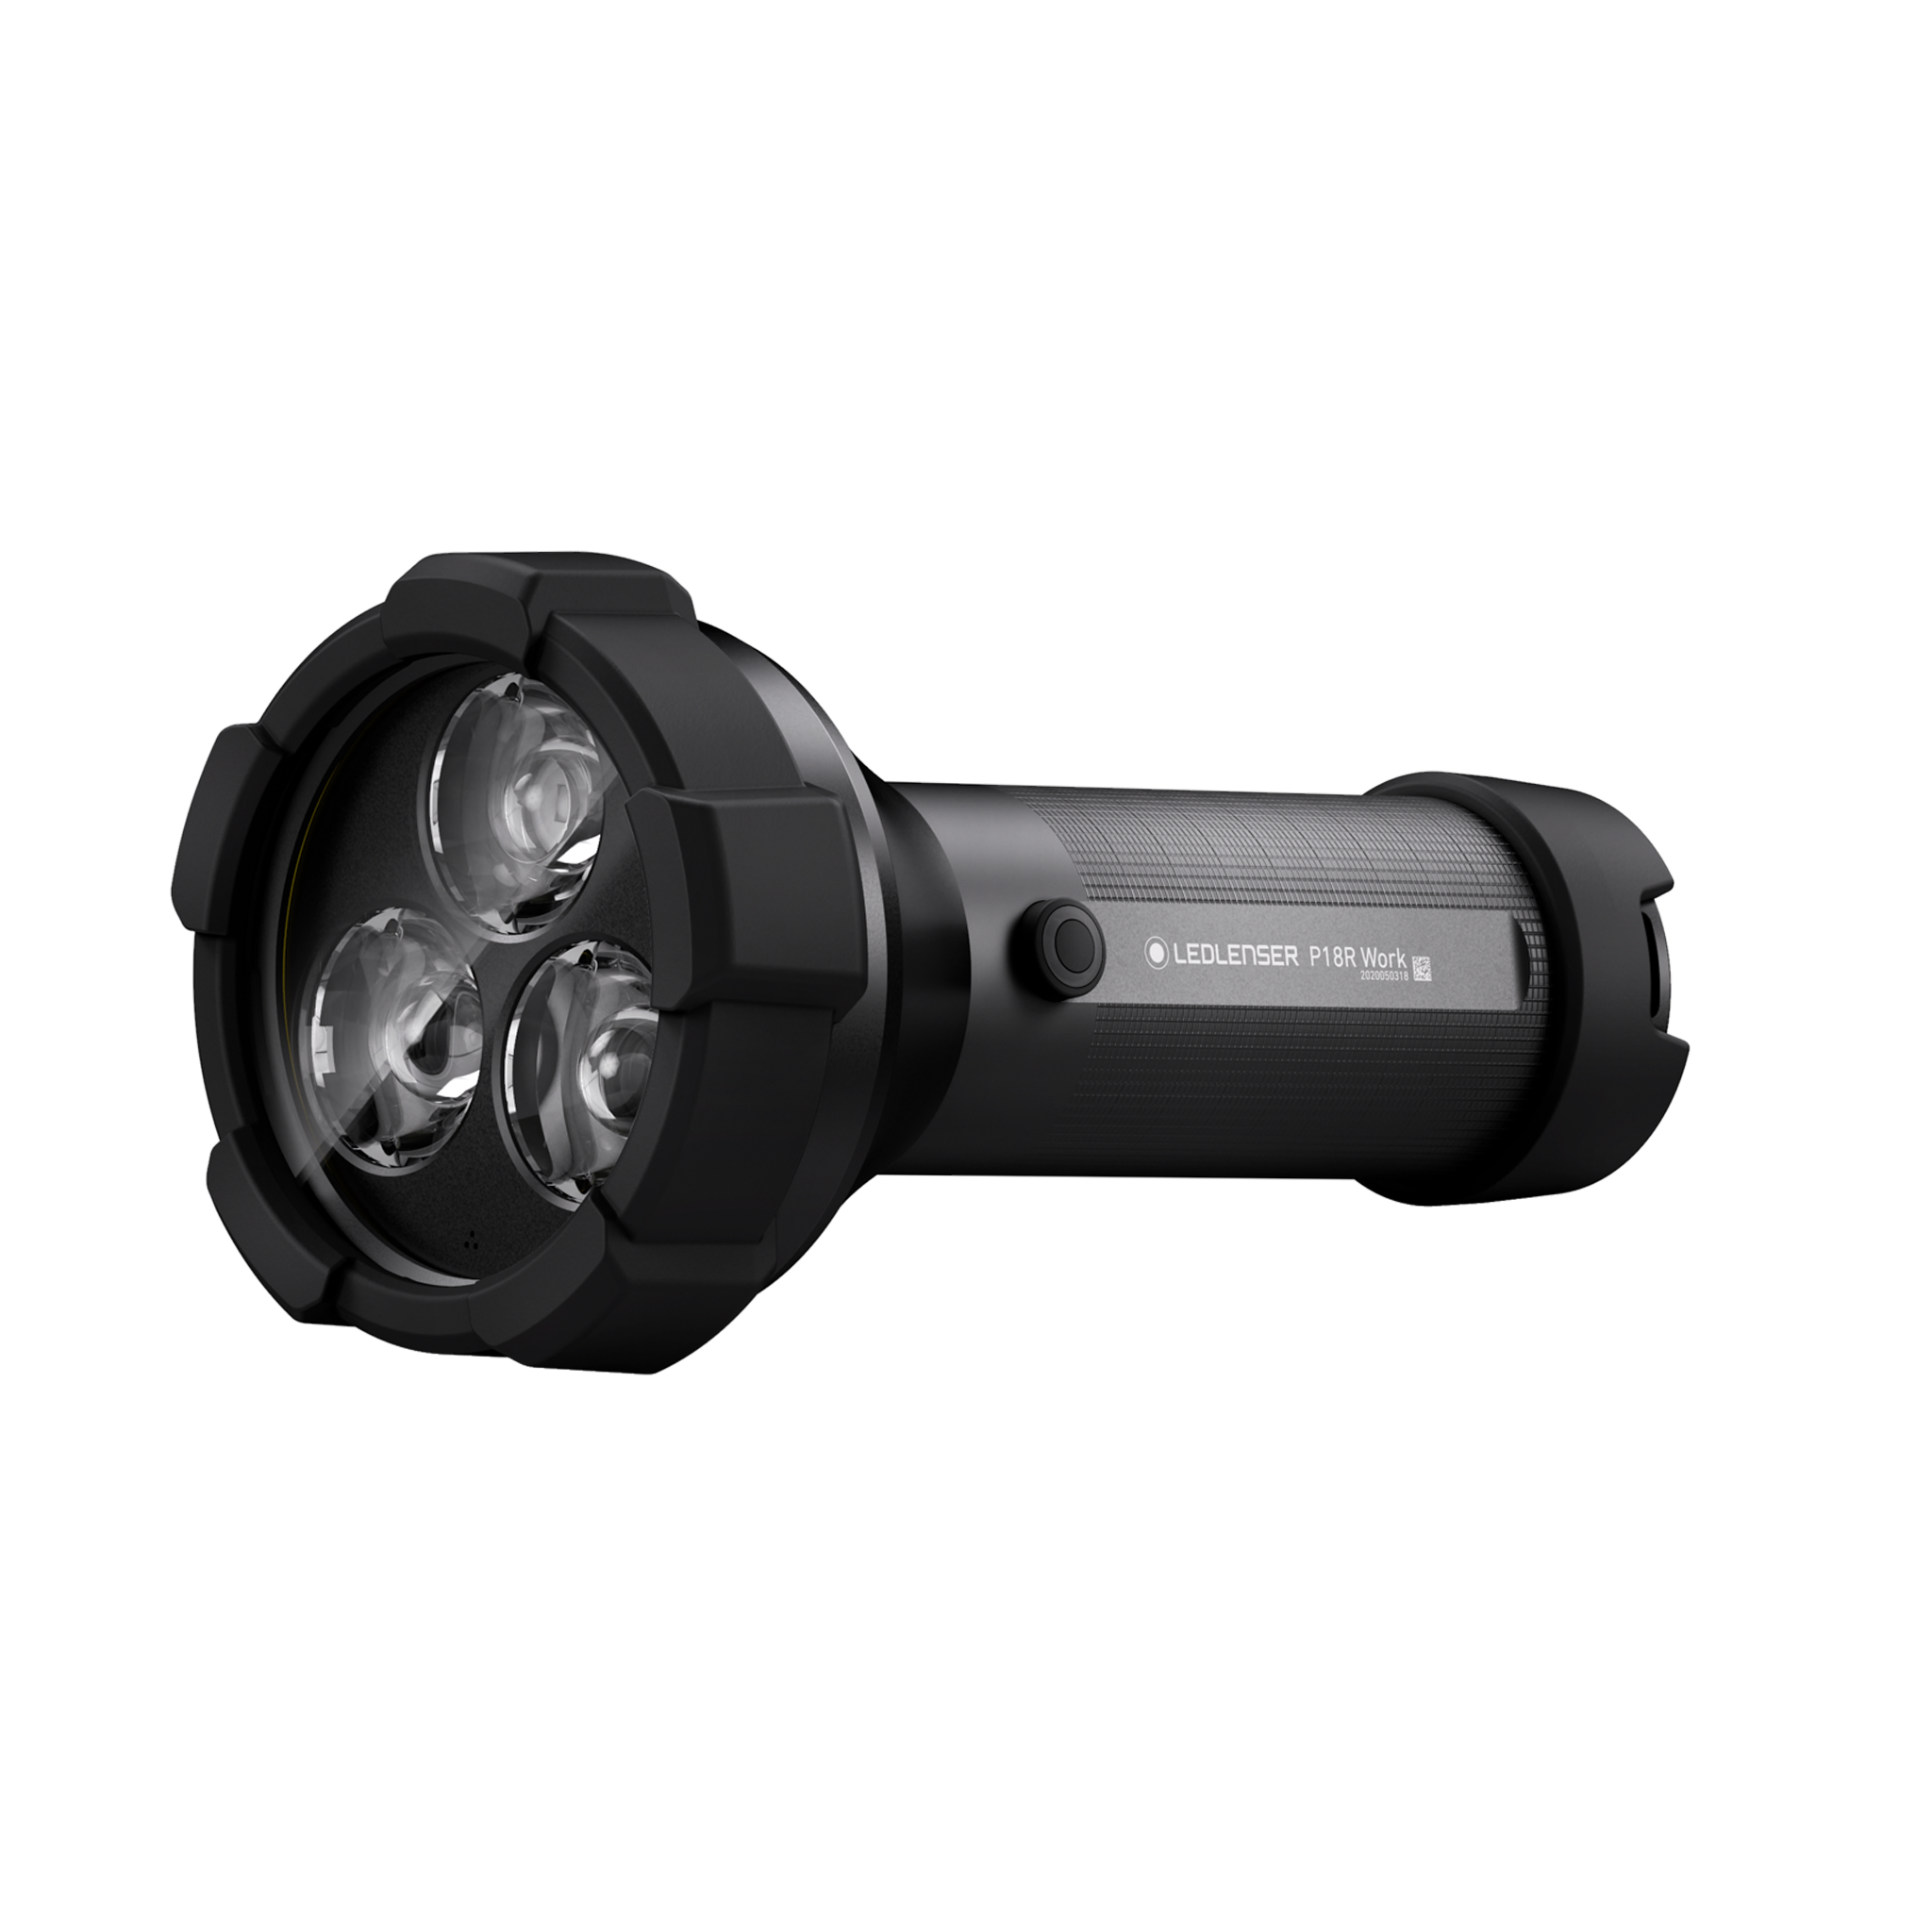 Ledlenser P5 flashlight  Advantageously shopping at